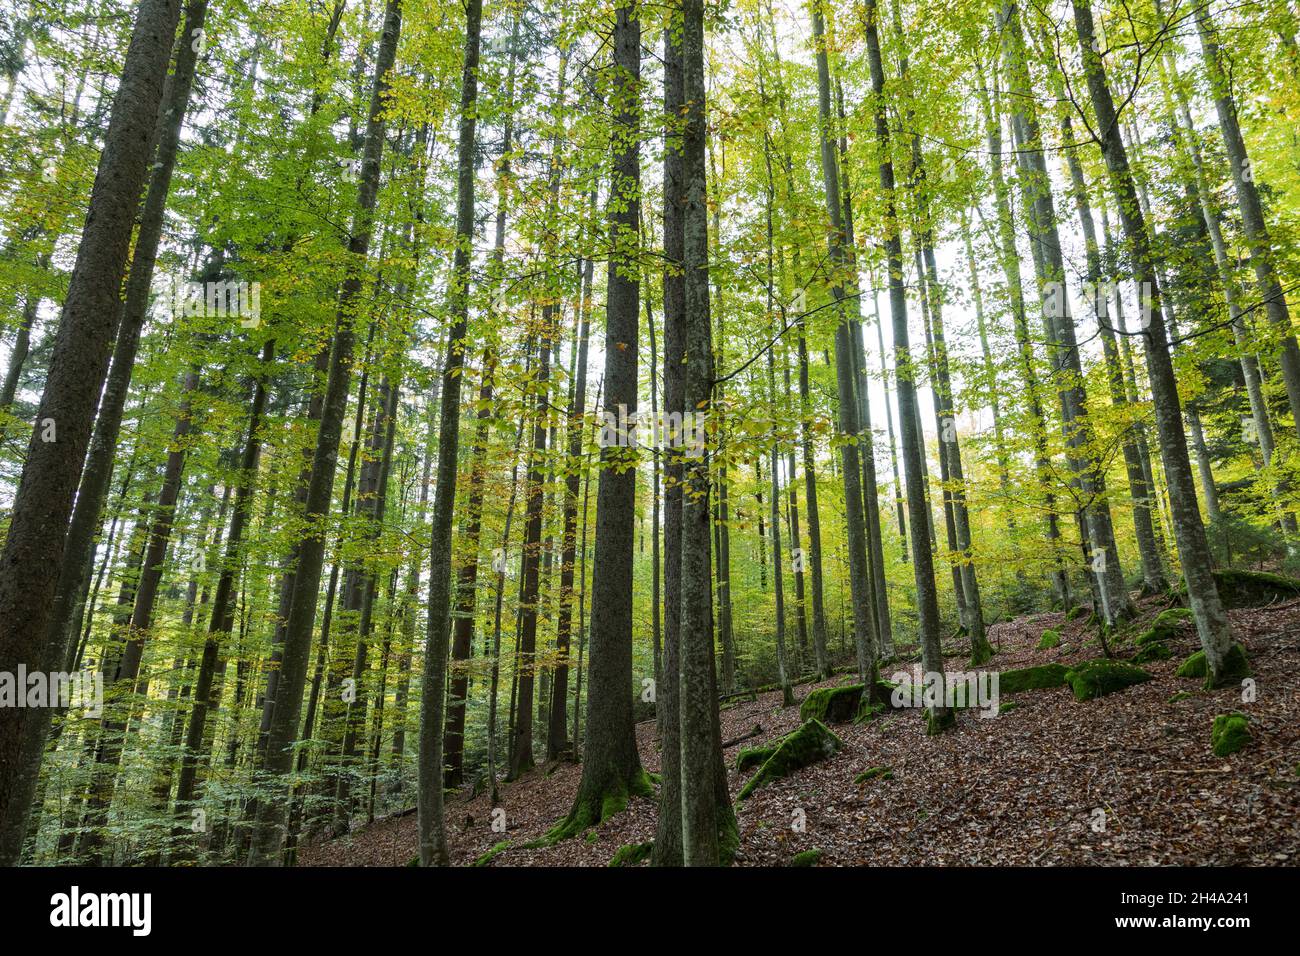 Buchenmischwald, Mixed beech forest Stock Photo